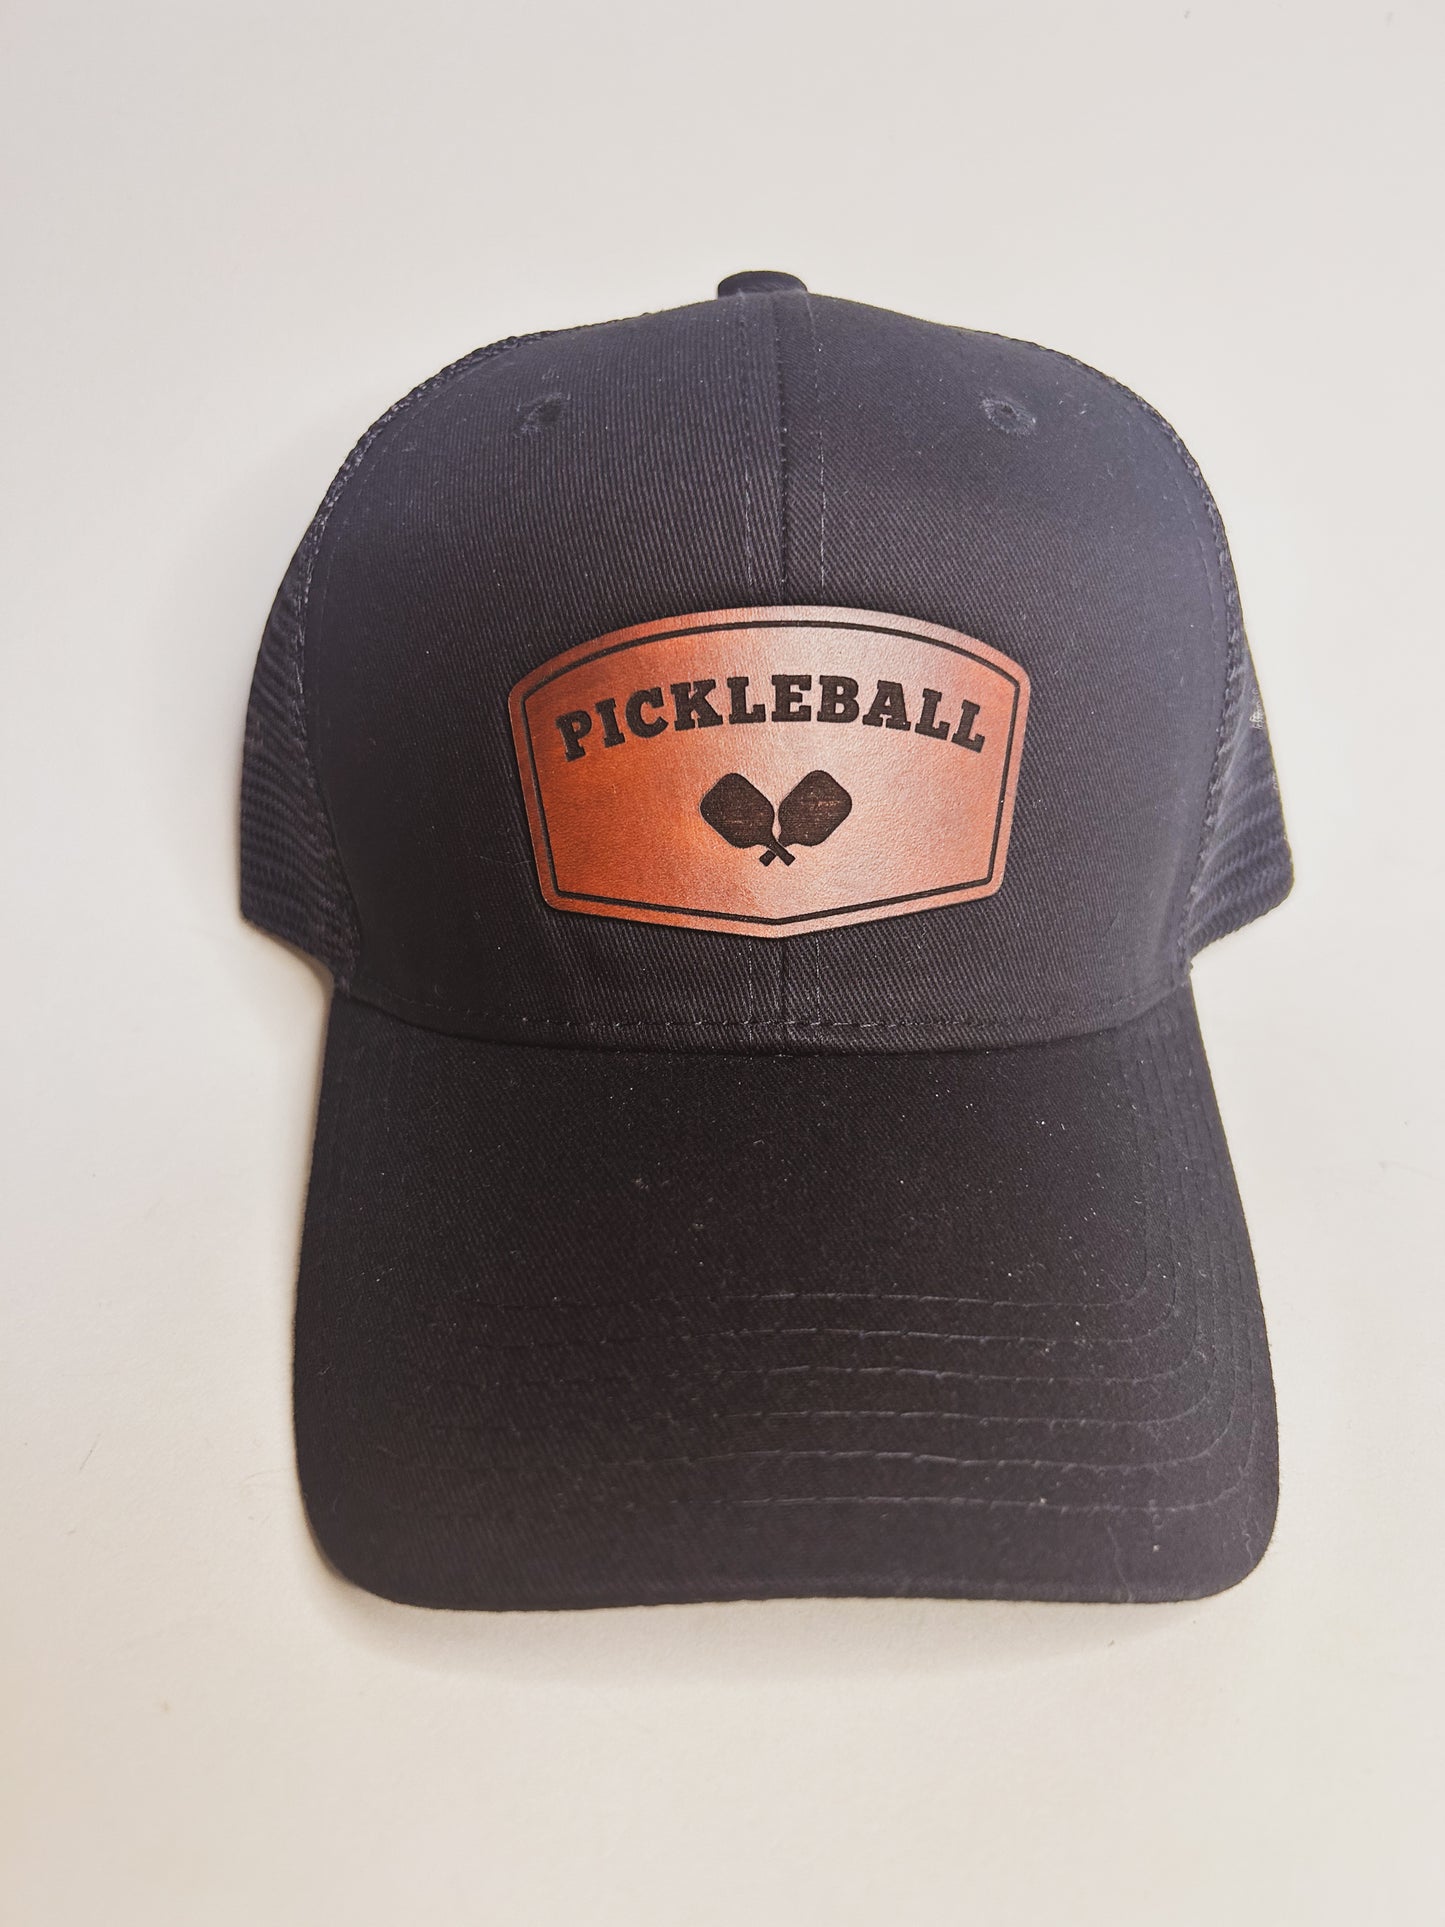 Pickleball Patch on Black Baseball Hat